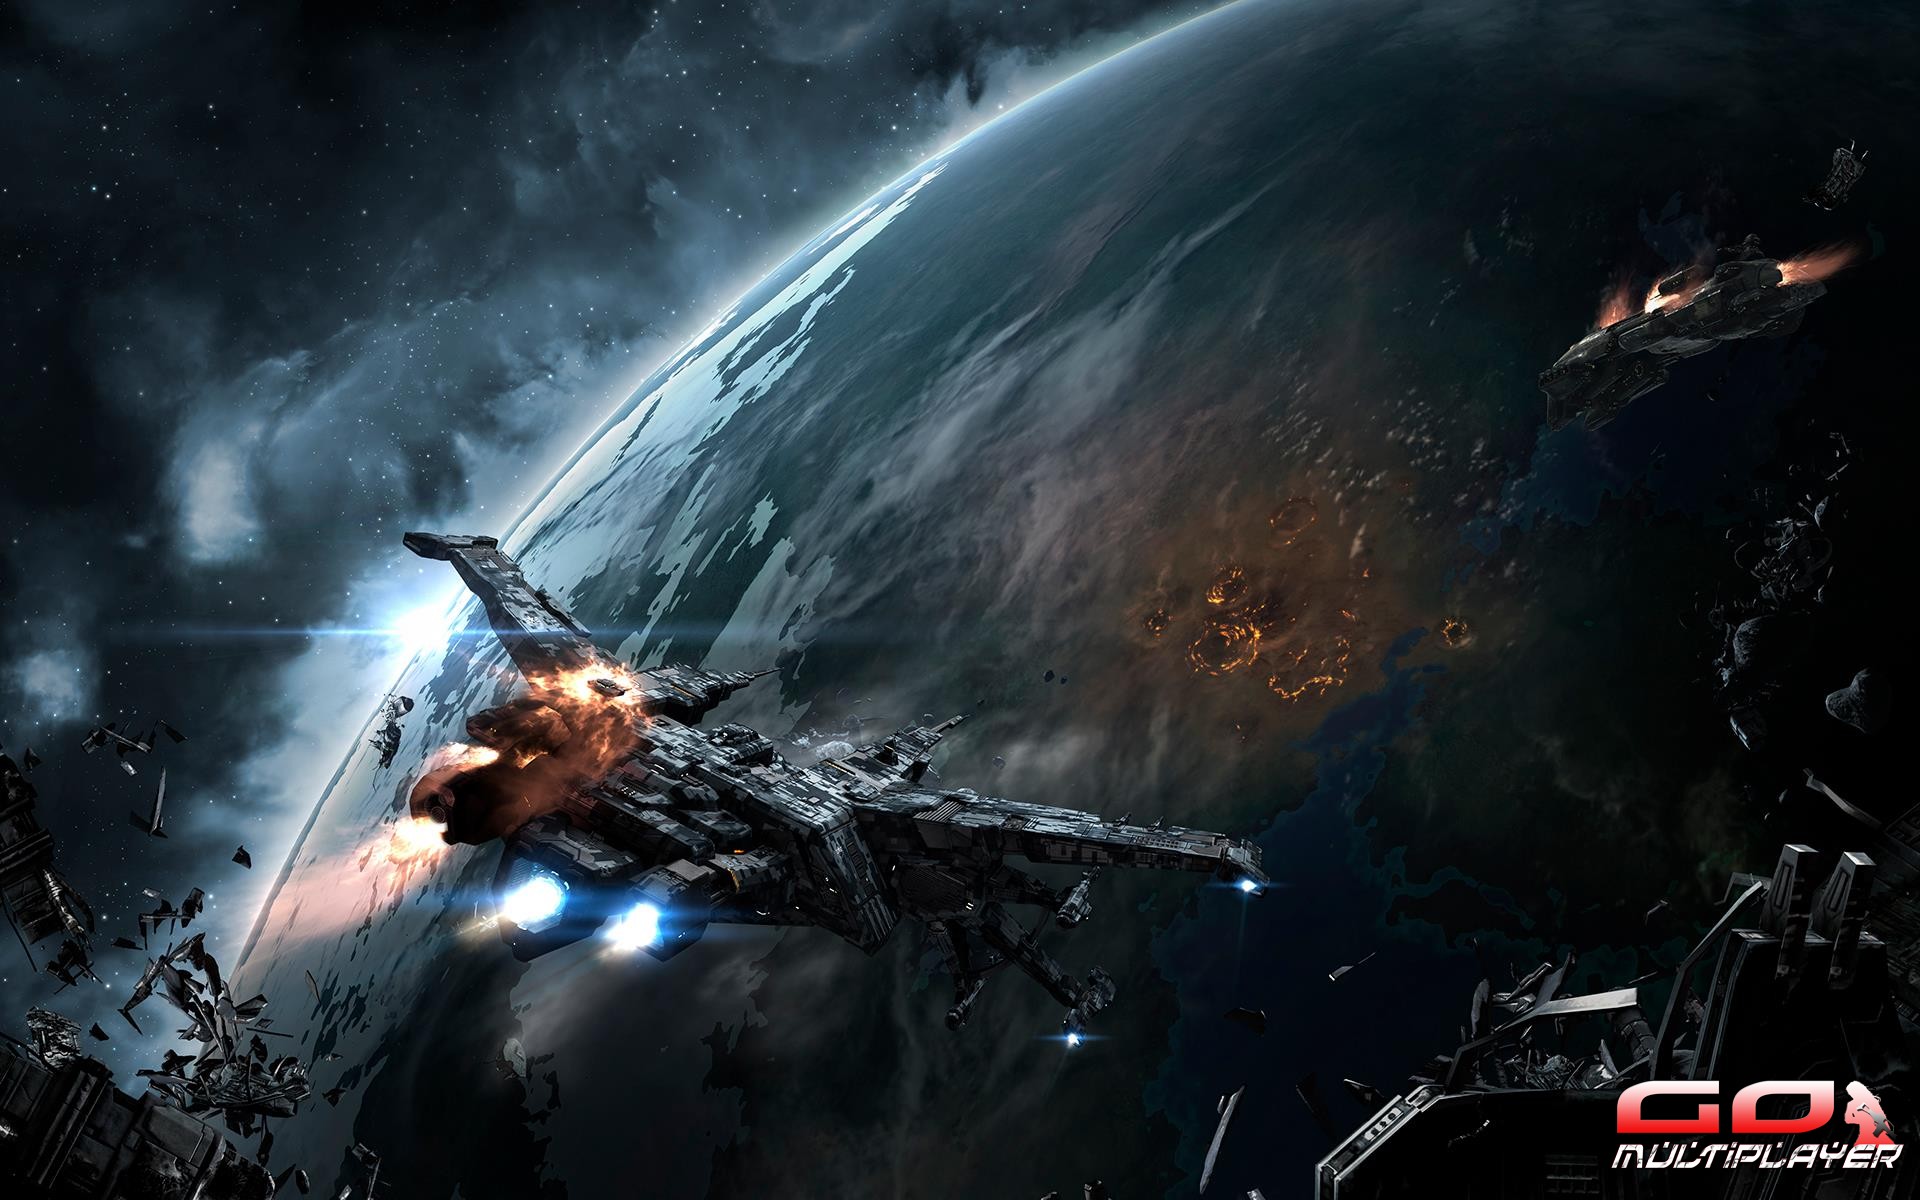 Eve Online Battle for Caldari Prime